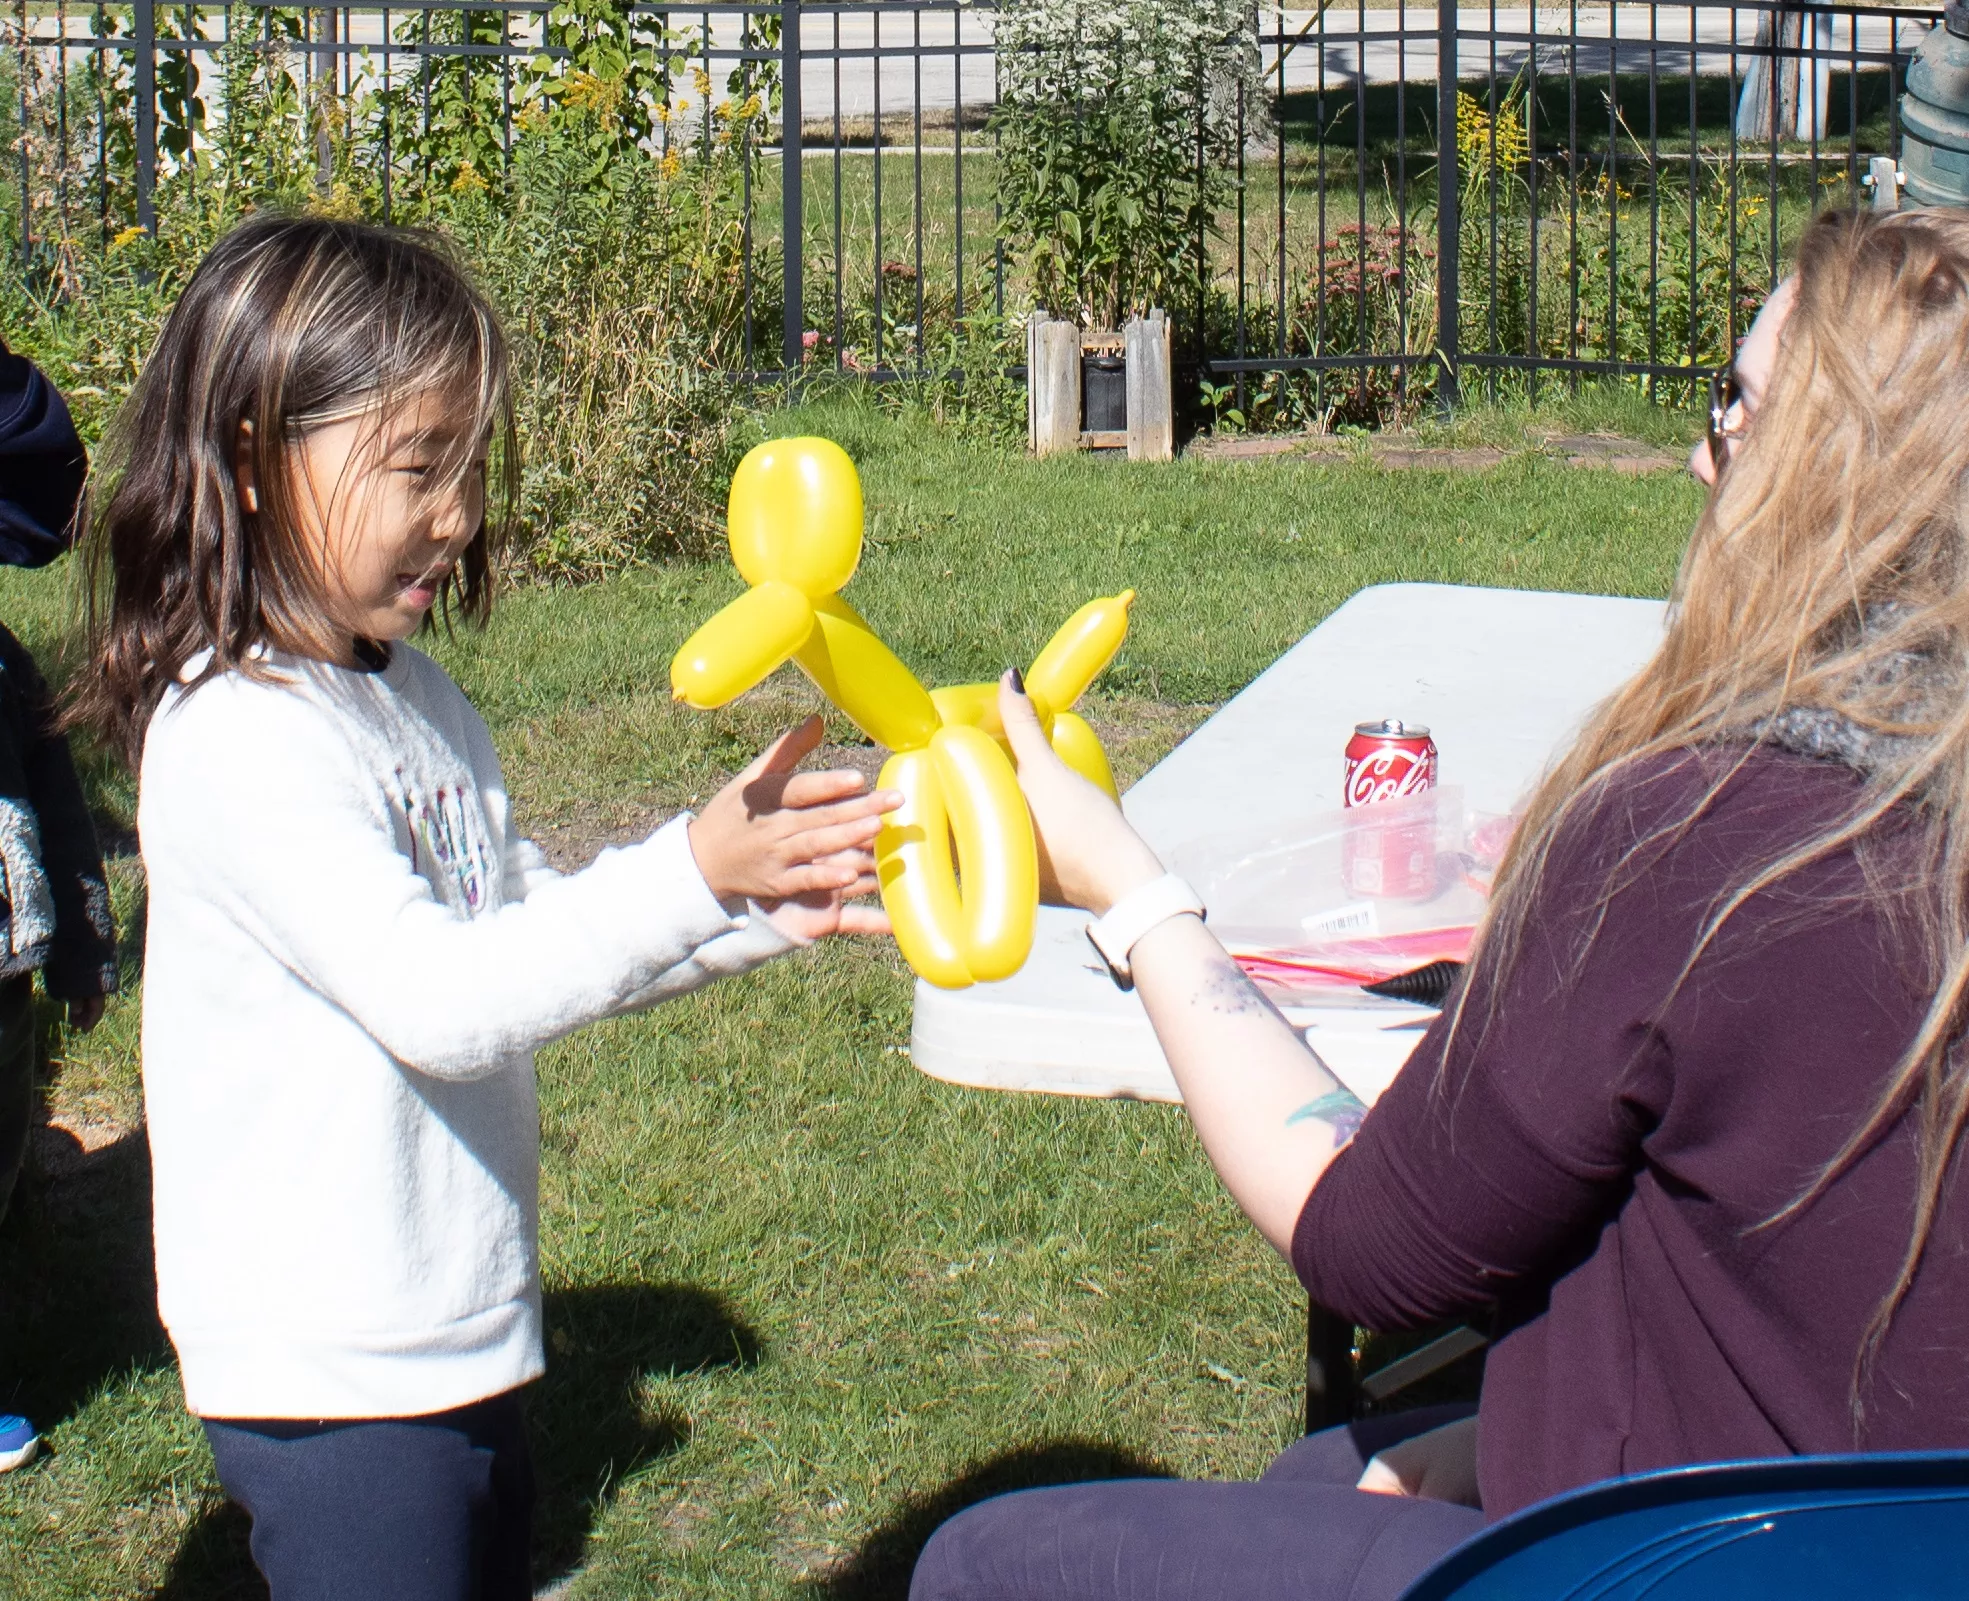 Child getting a yellow balloon animal